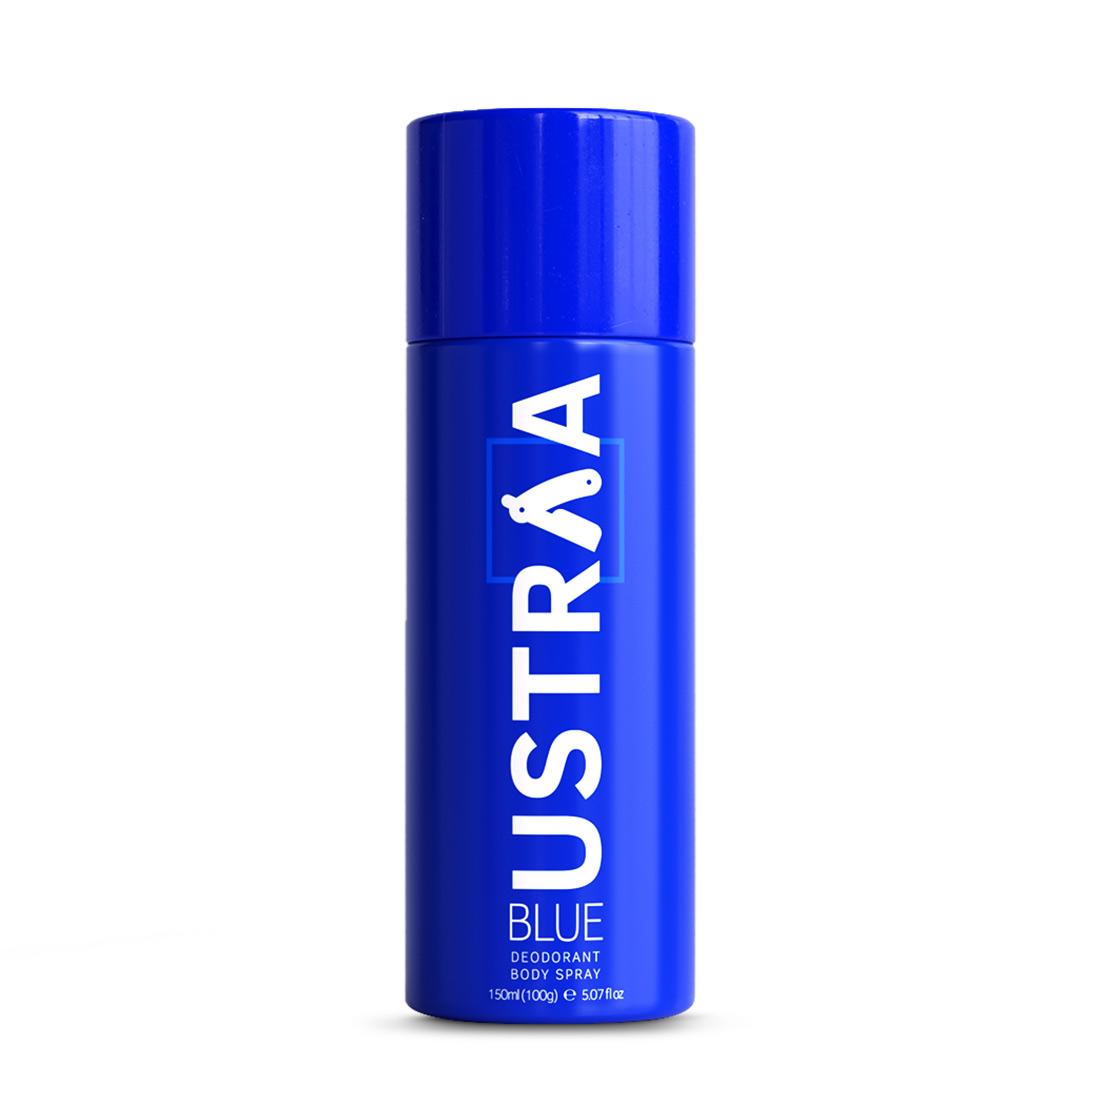 BLUE Deodorant Body Spray - 150 ml